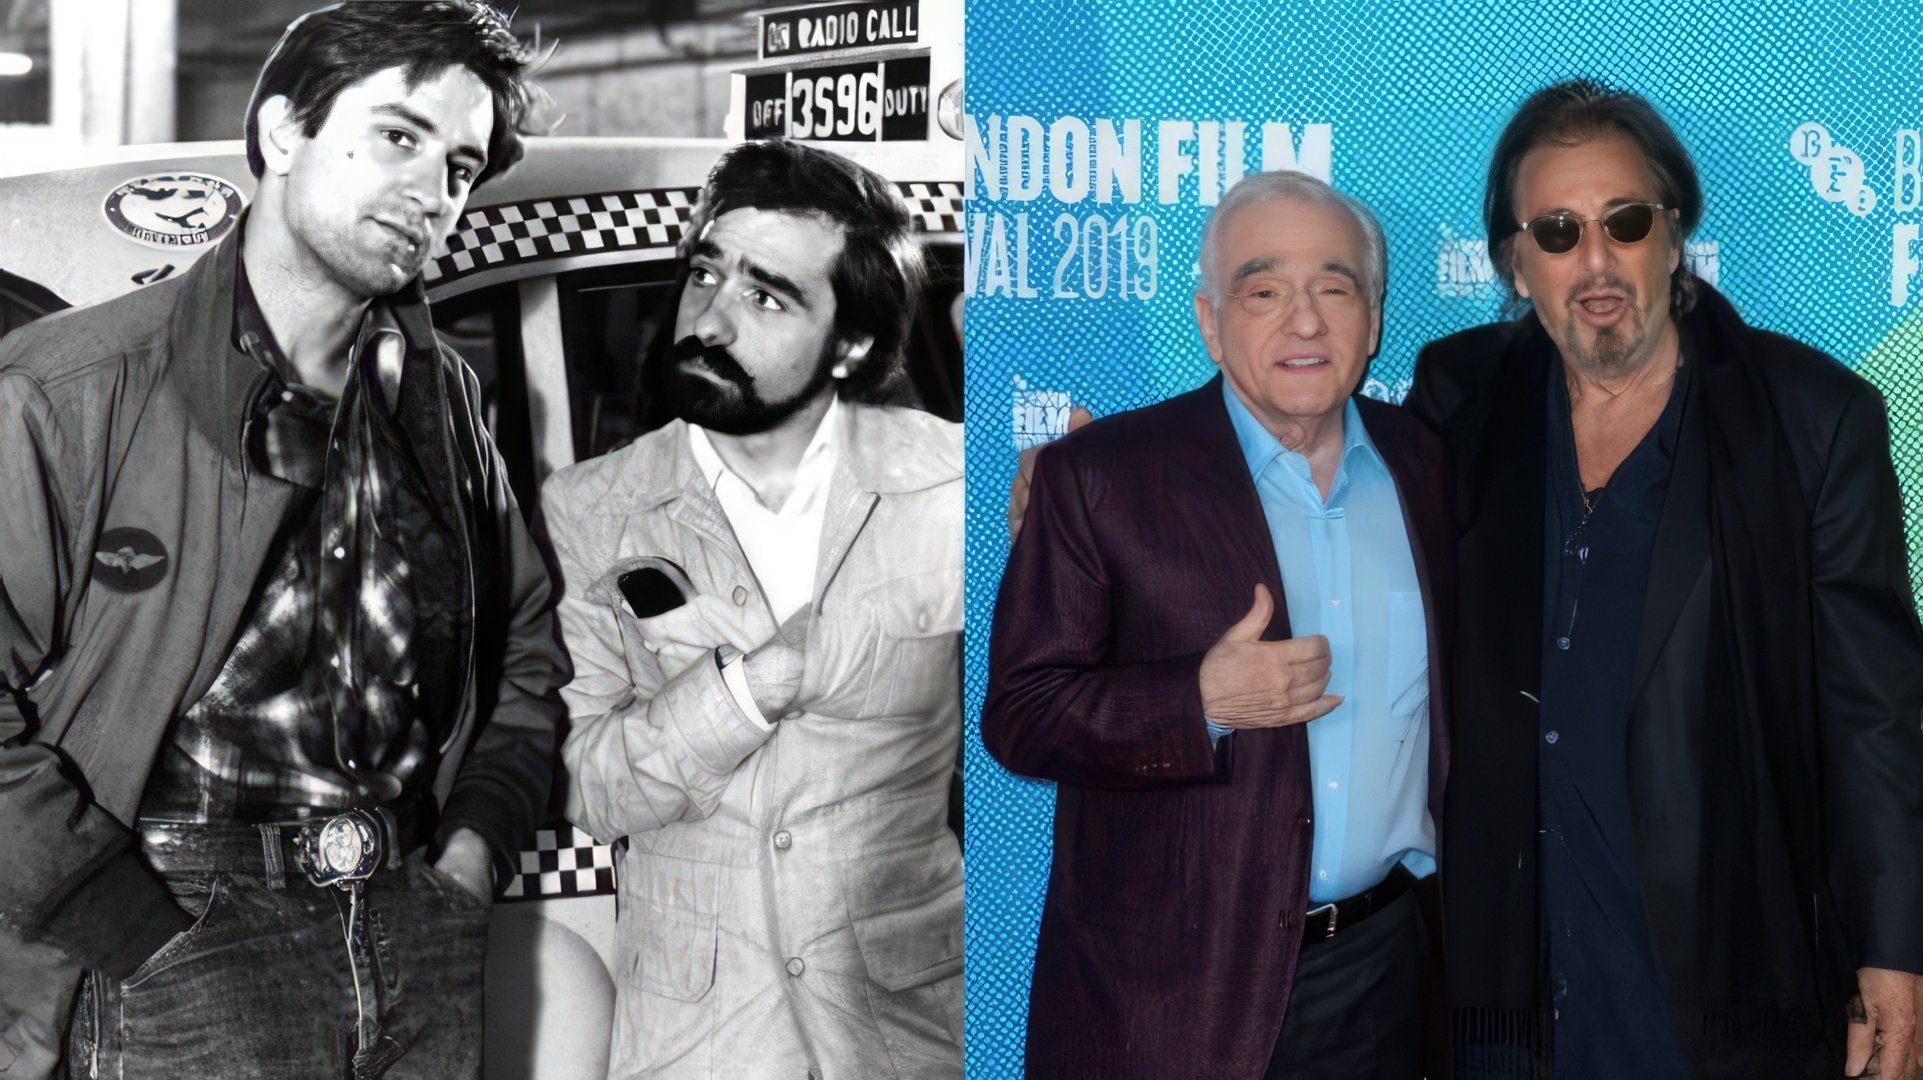 Robert De Niro and Martin Scorsese: a friendship that has spanned decades